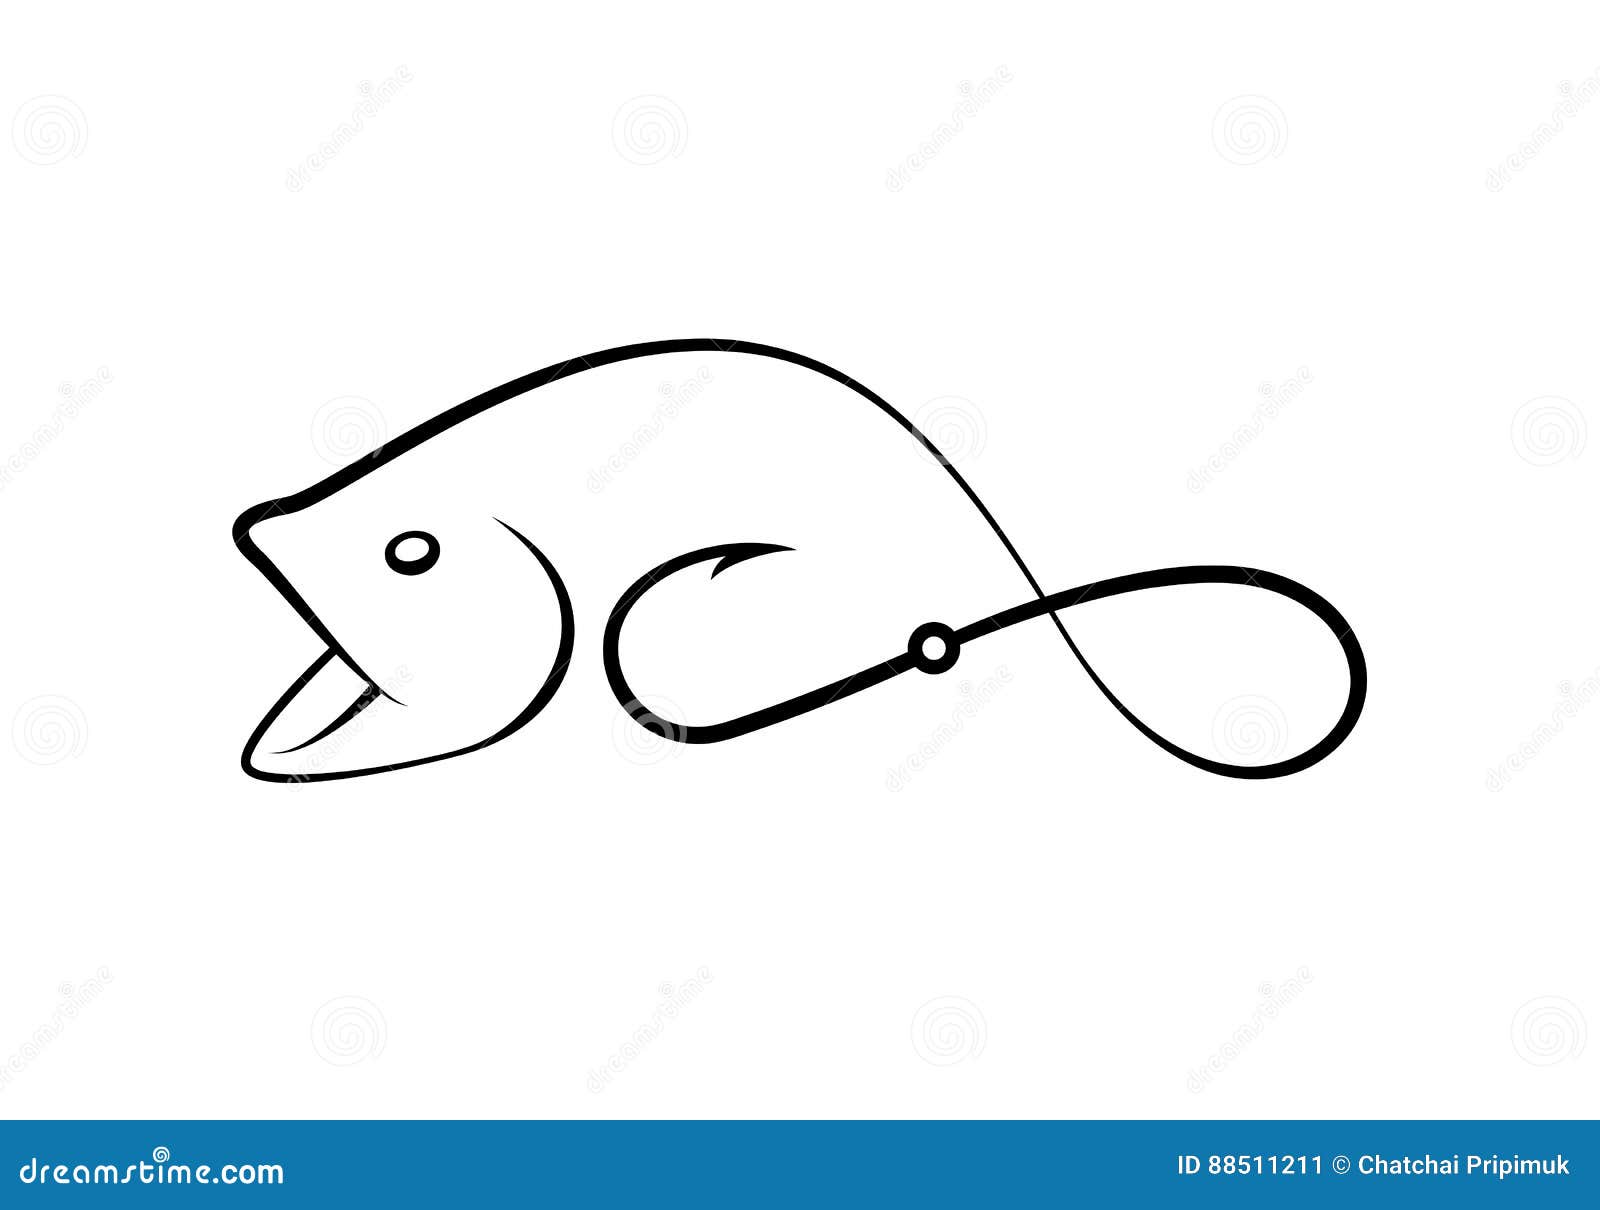 Graphic Fishing Hook, Vector Stock Vector - Illustration of line, design:  88511211